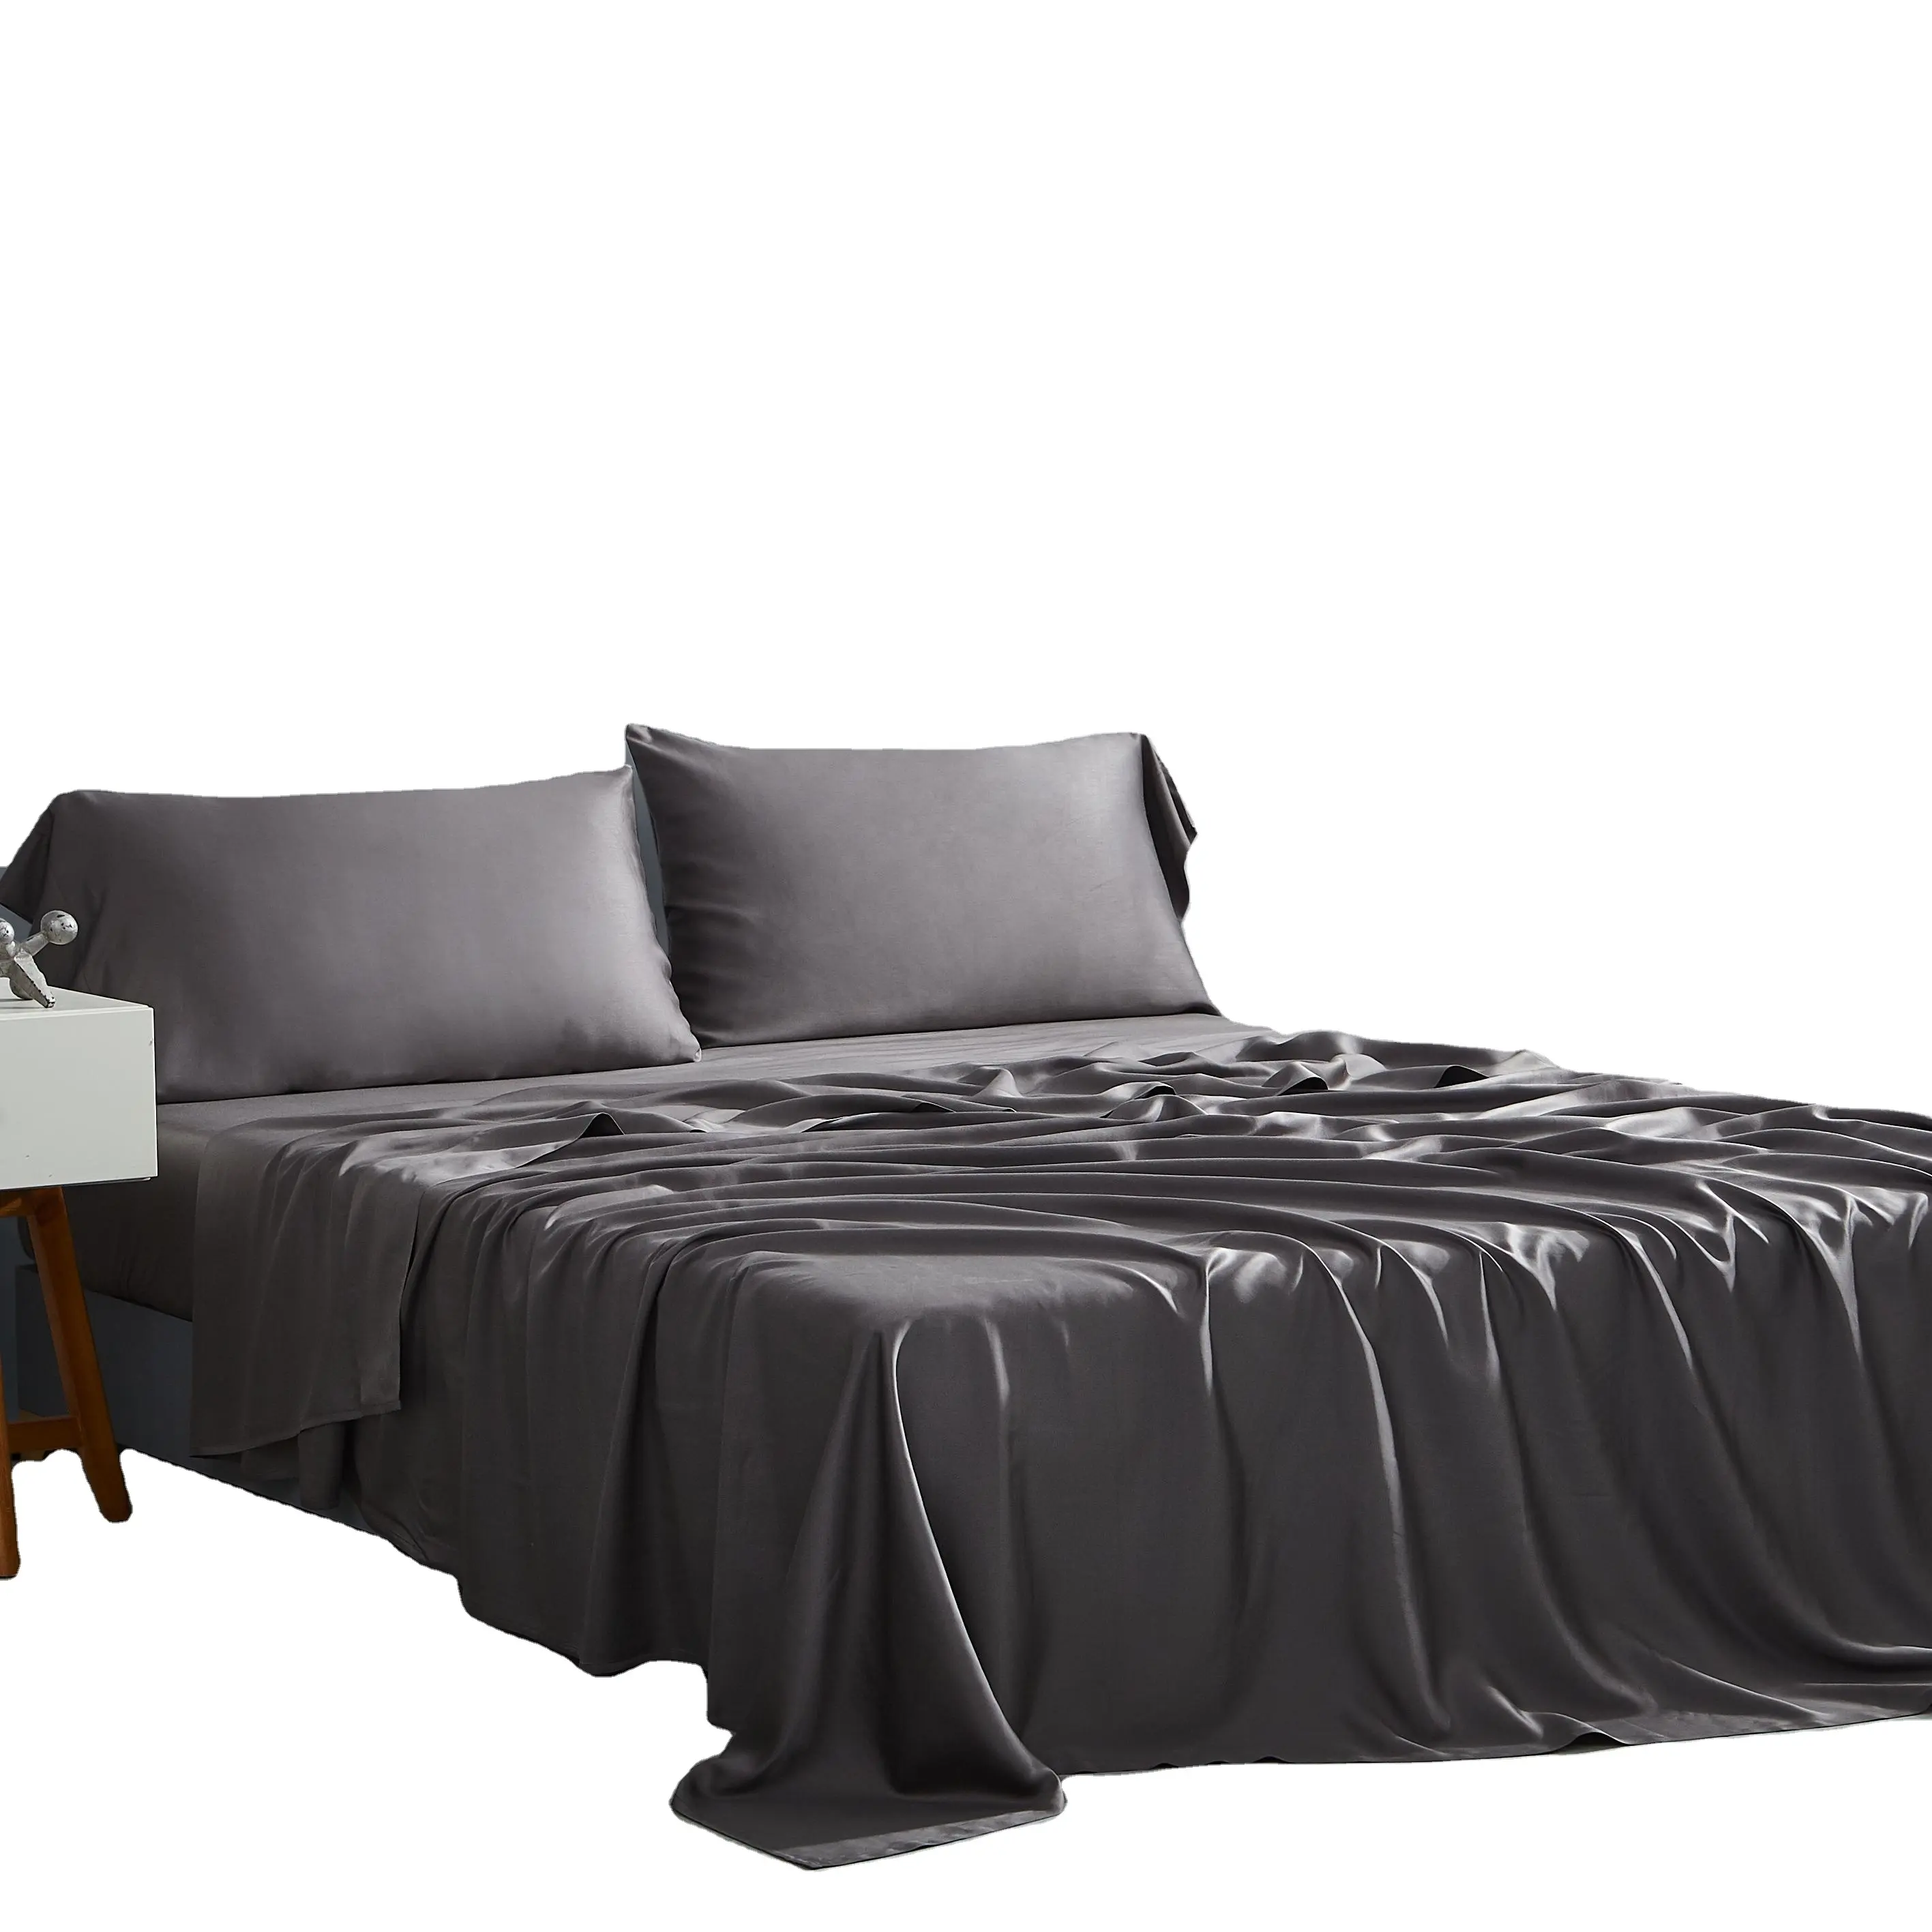 Home Textile 100% Bamboo White Bedsheet Flat Sheet fitted Bed Sheets Set Luxury 6 Pcs Sheet Set